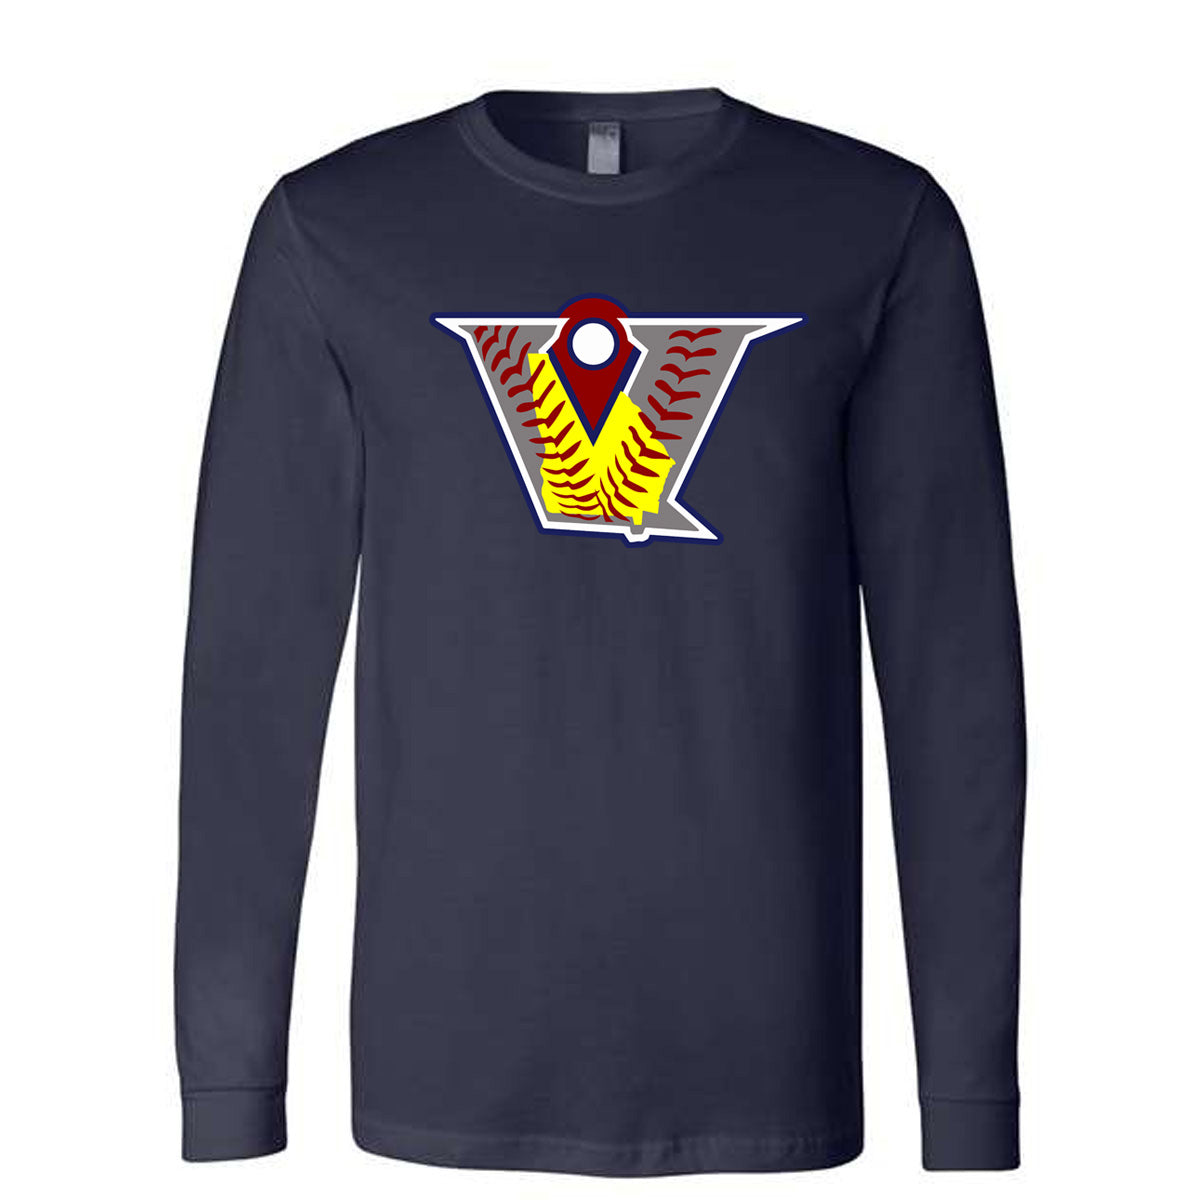 Velo FP - Velocity Fastpitch Logo - Navy (Tee/Hoodie/Sweatshirt) - Southern Grace Creations